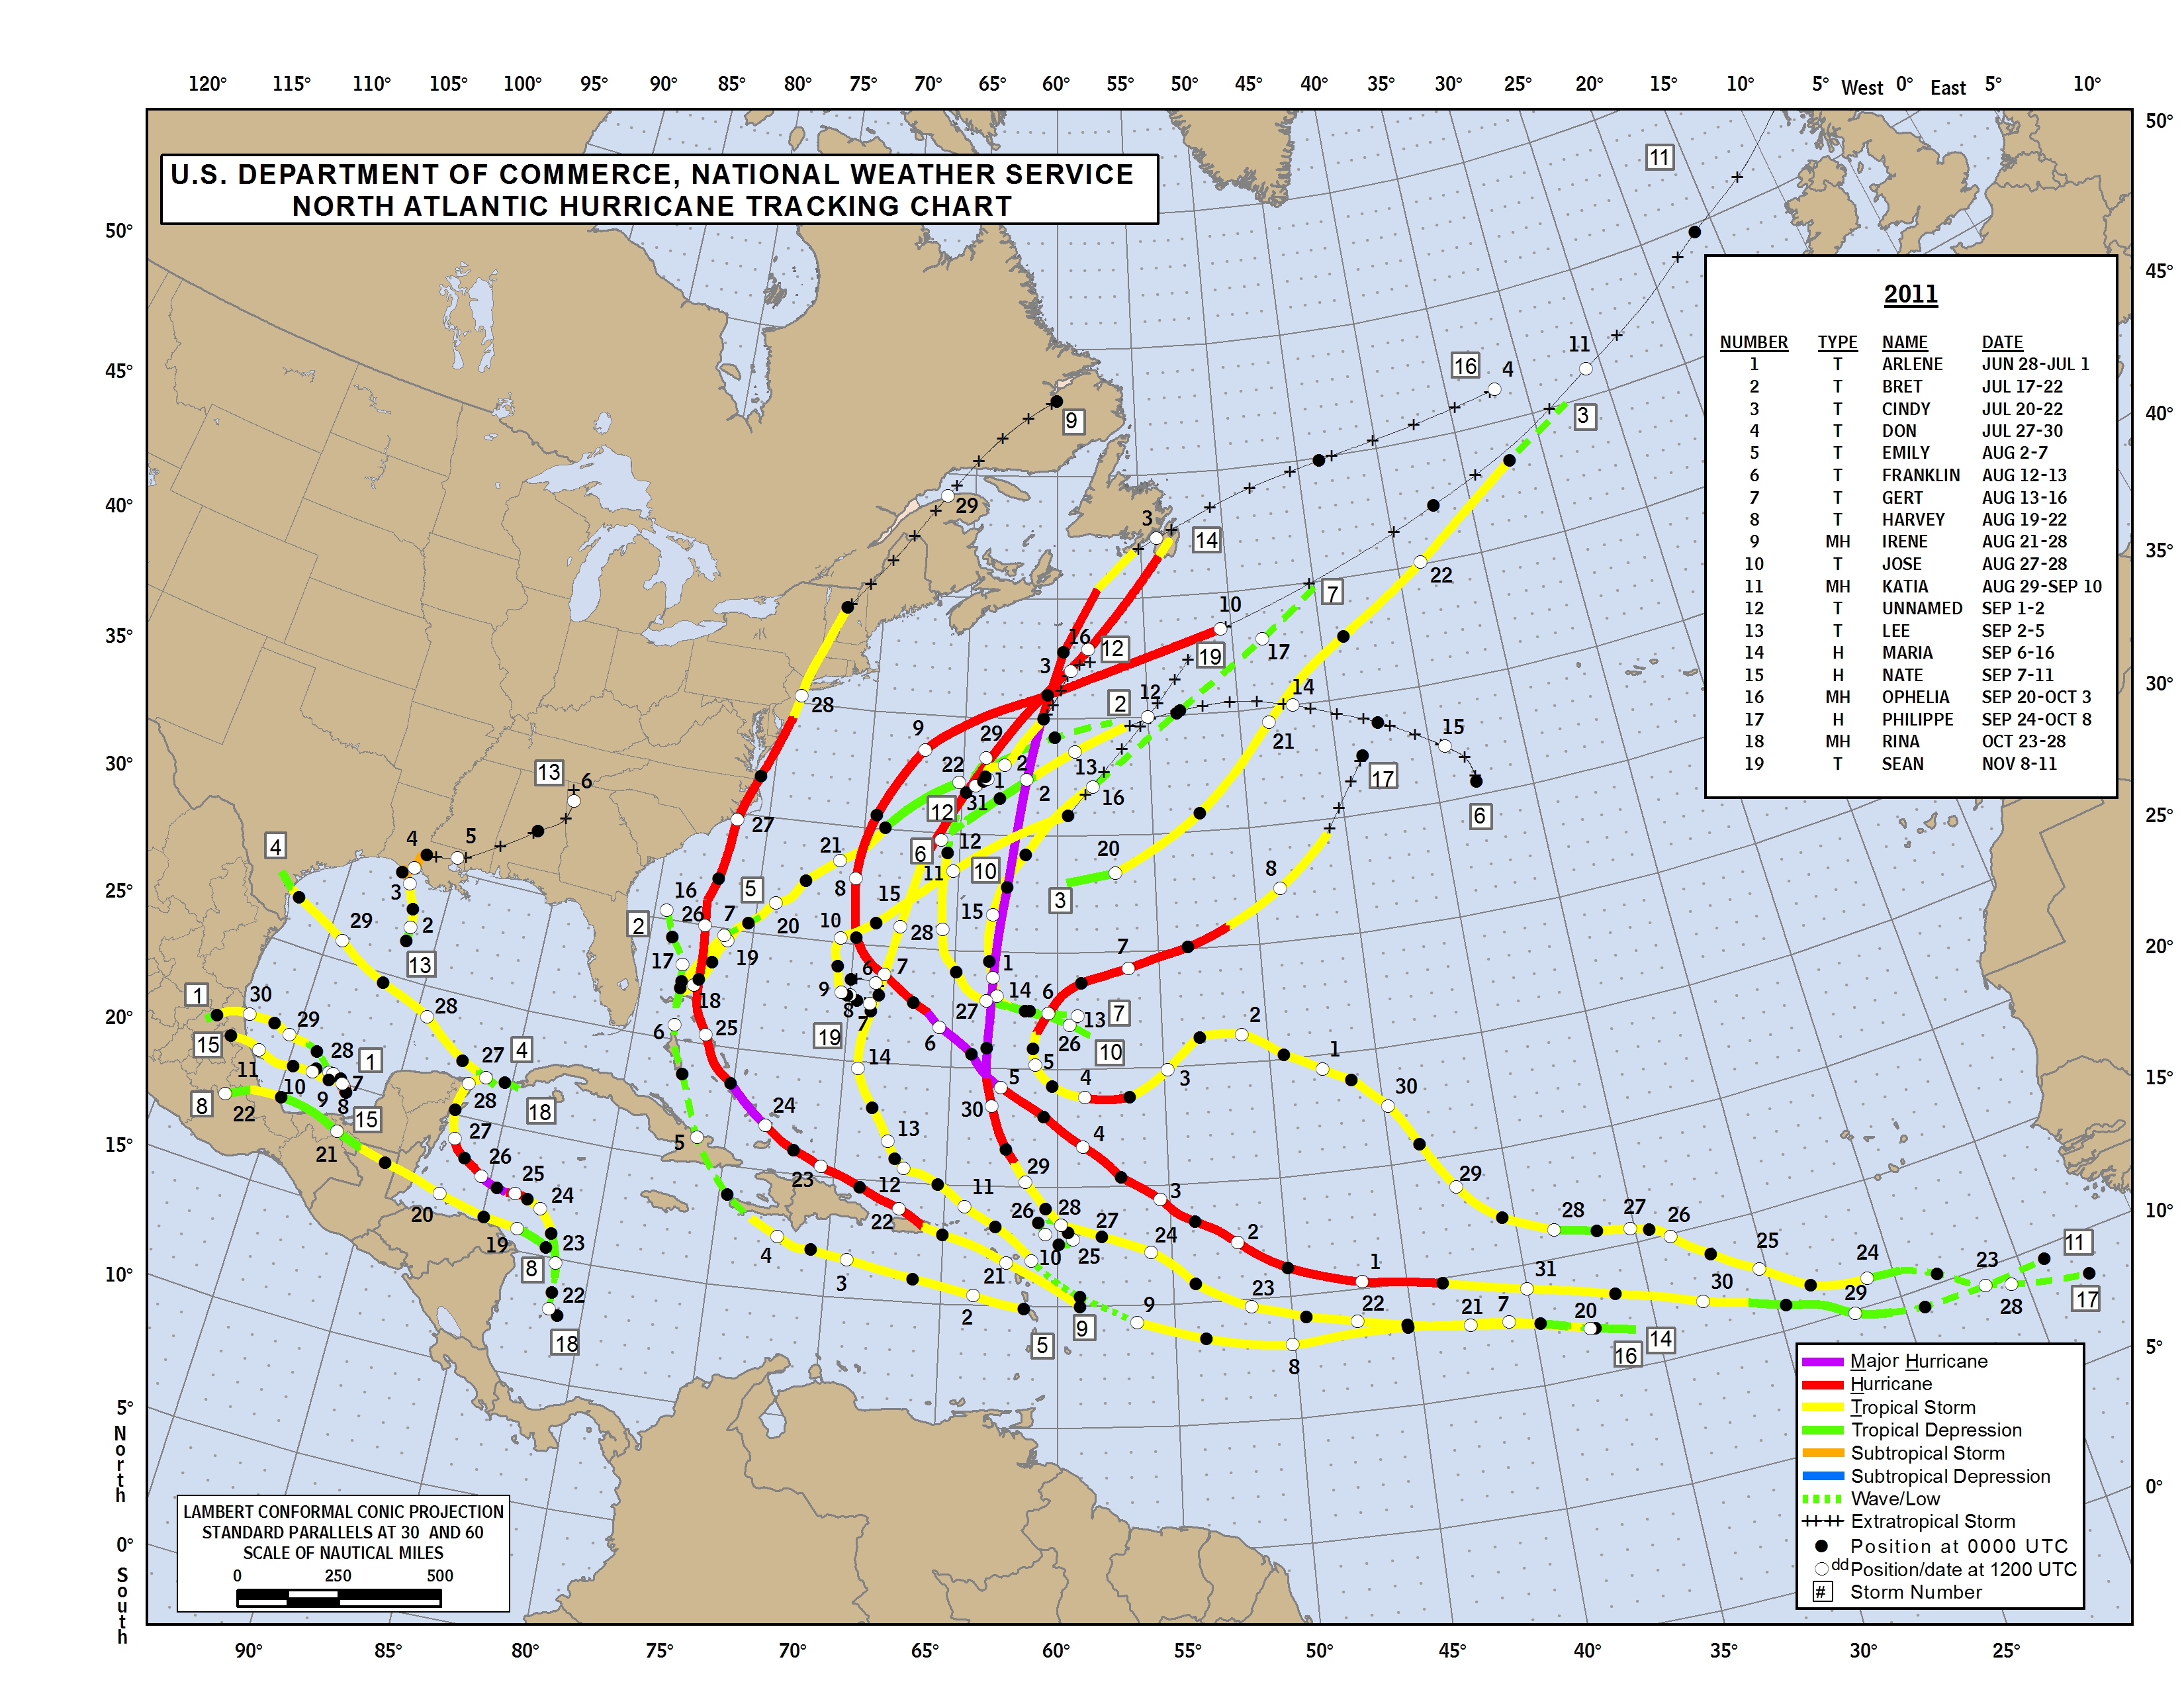 Atlantic Basin Hurricane Tracking Chart Worksheet Answers